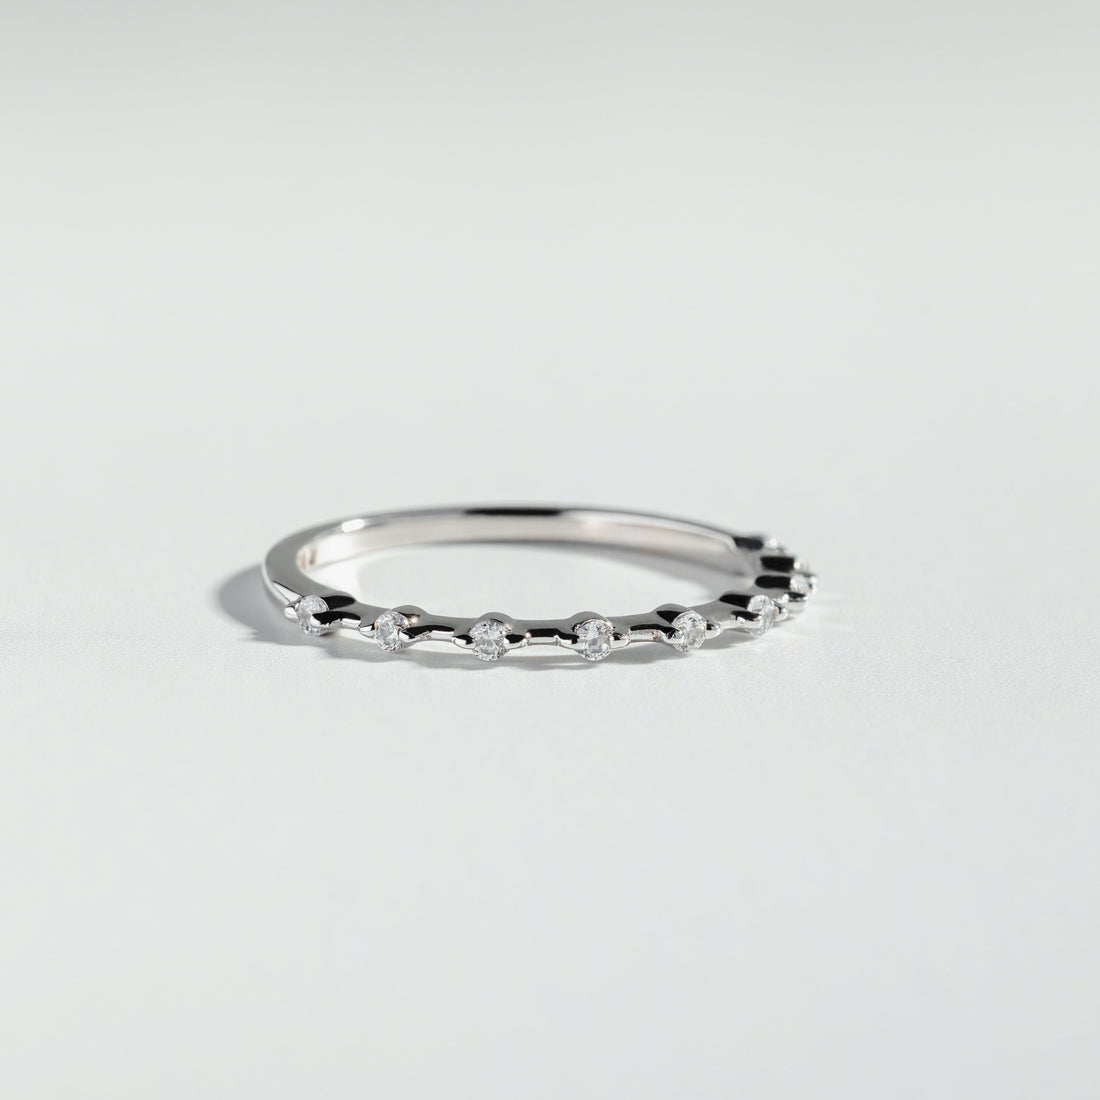 The Petite Half Eternity Ring